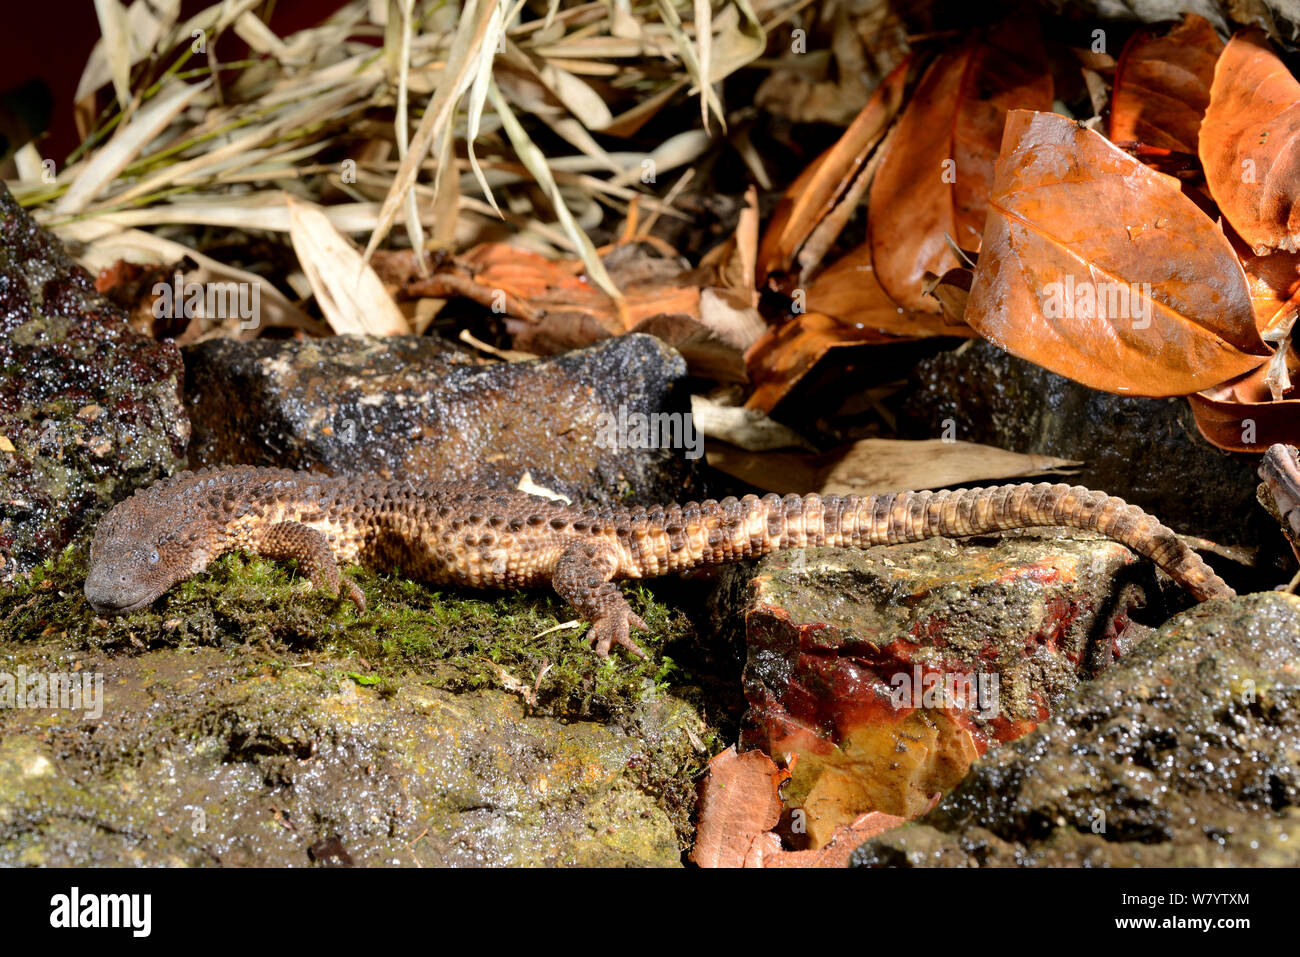 Earless monitor lizard (Lanthanotus borneensis) venomous species, captive from Borneo. Stock Photo